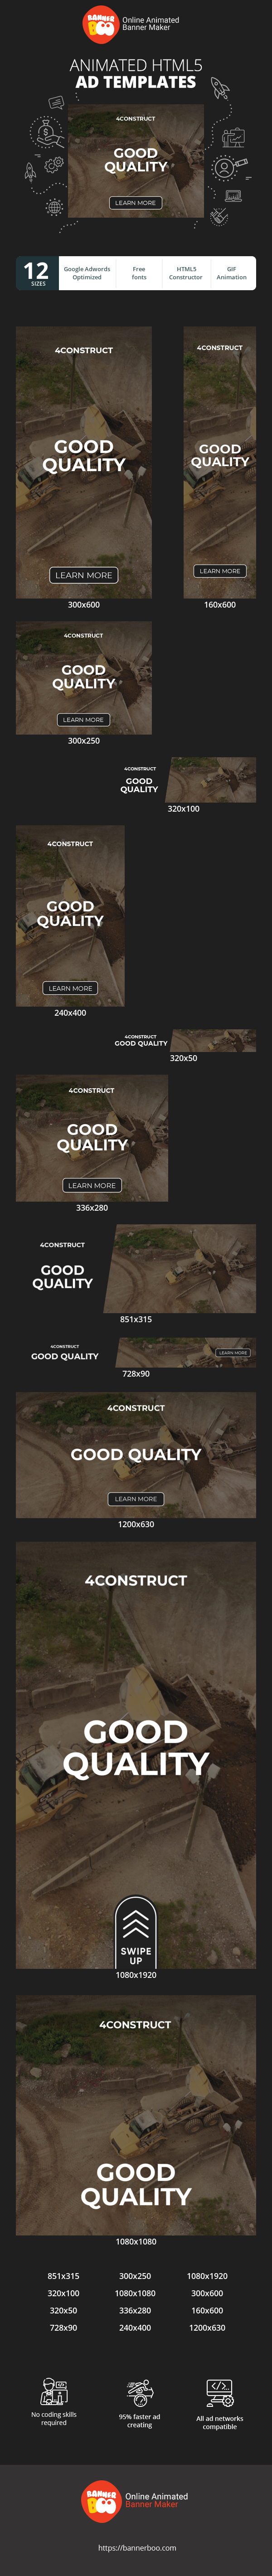 Szablon reklamy banerowej — Less Time Good Quality Best Service — Construction